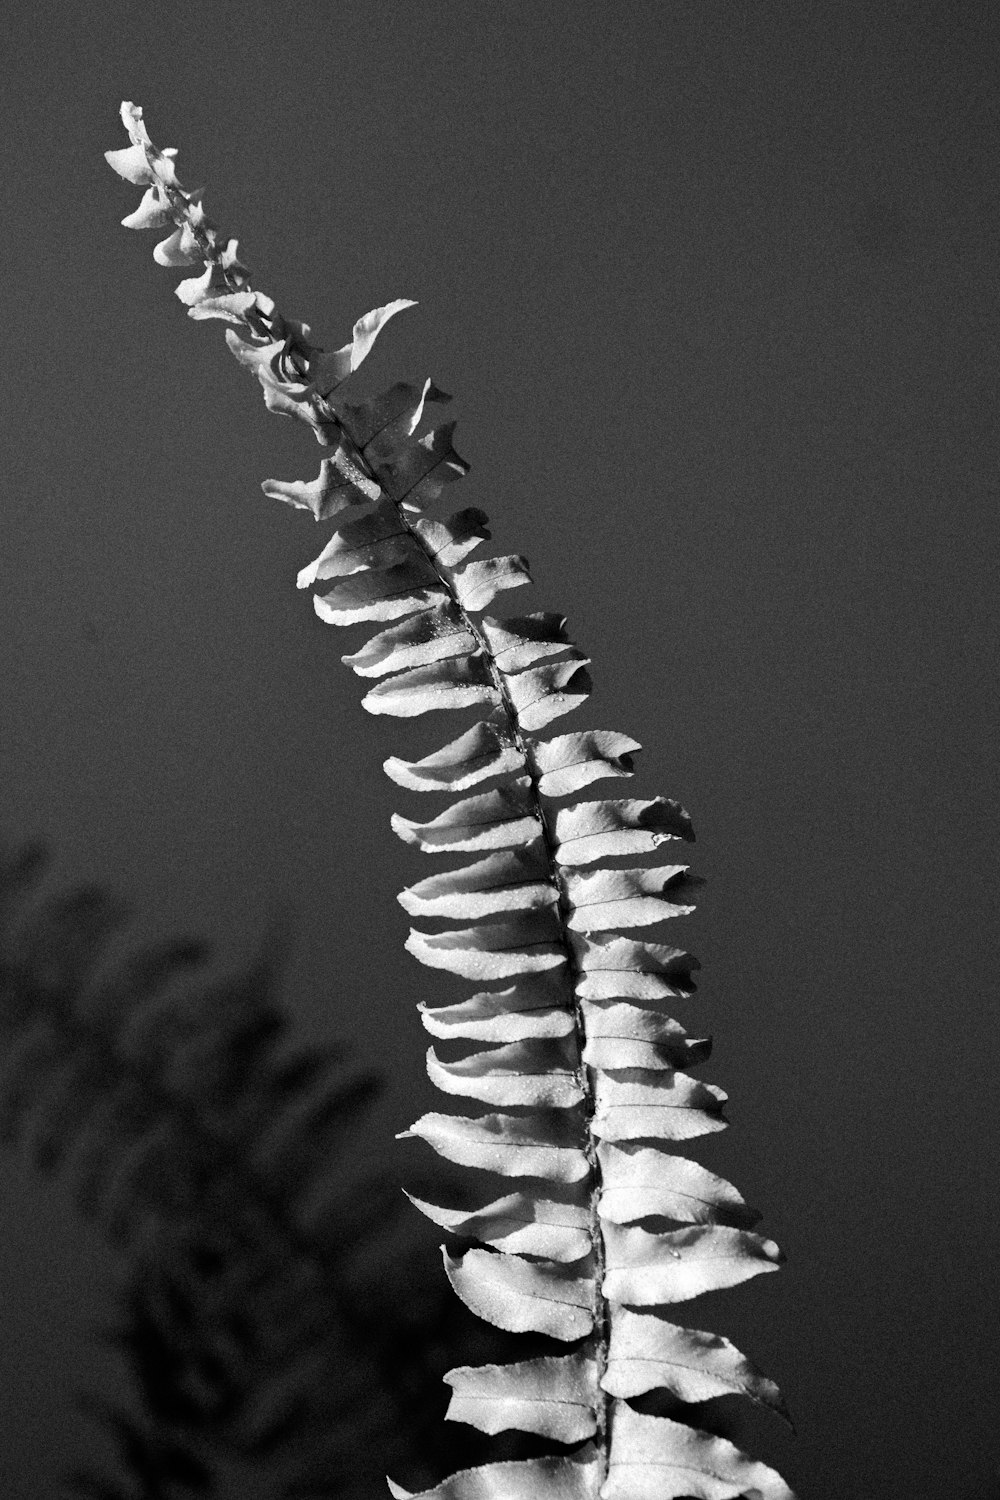 Photo en niveaux de gris de la tige de la plante